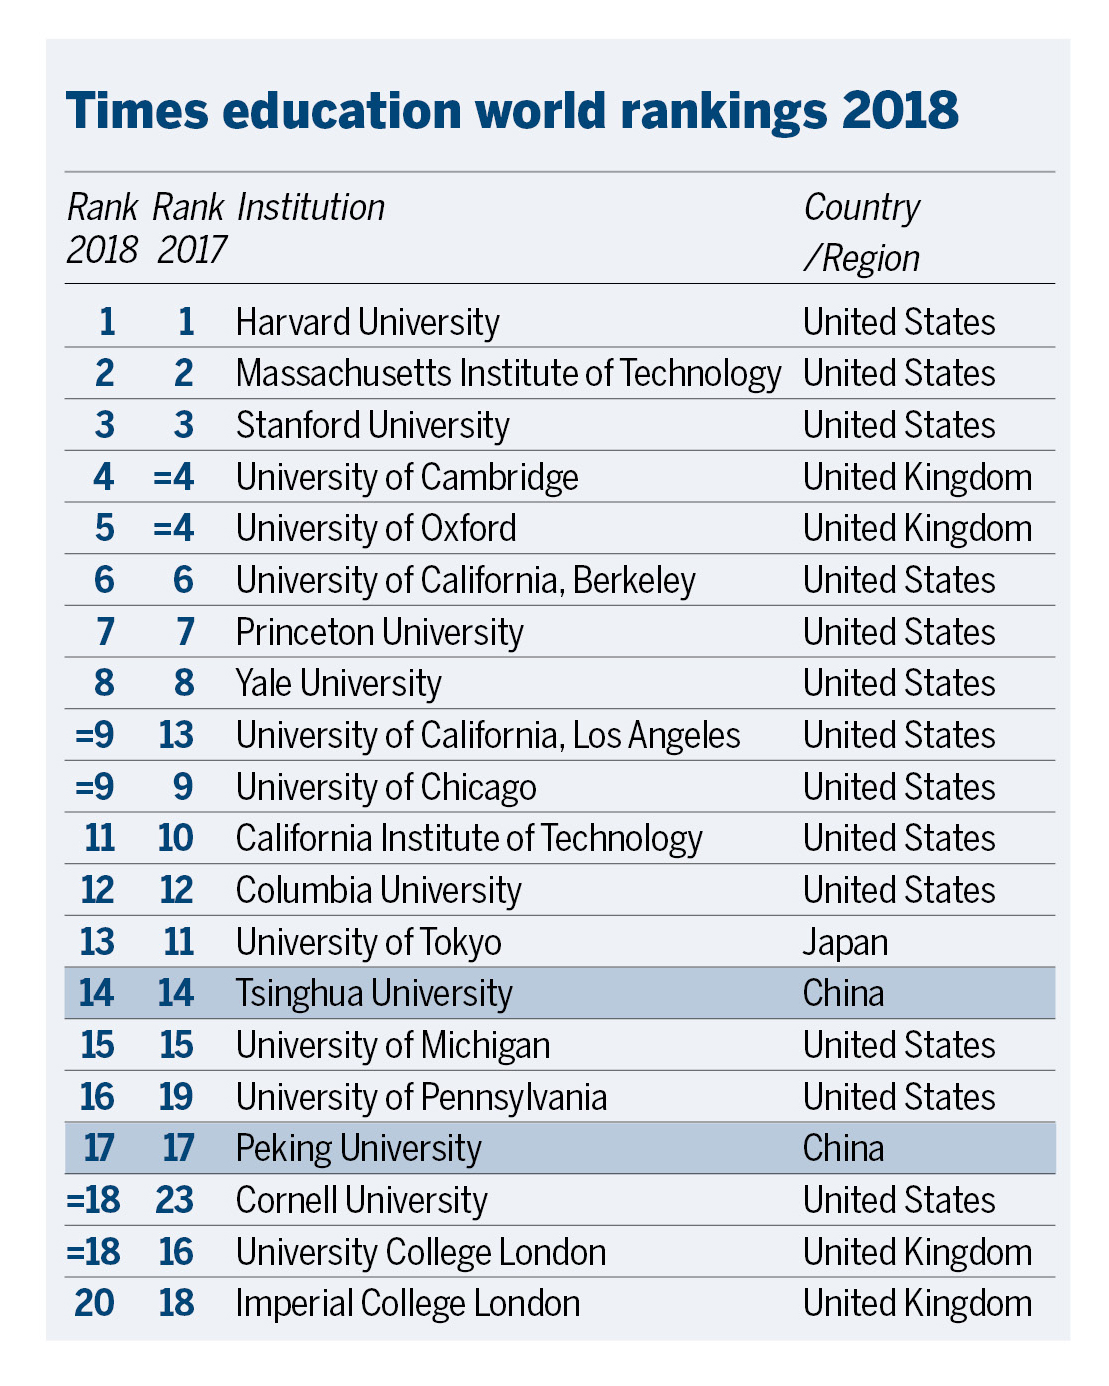 Chinese universities ranked among global elite - EUROPE - Chinadaily.com.cn